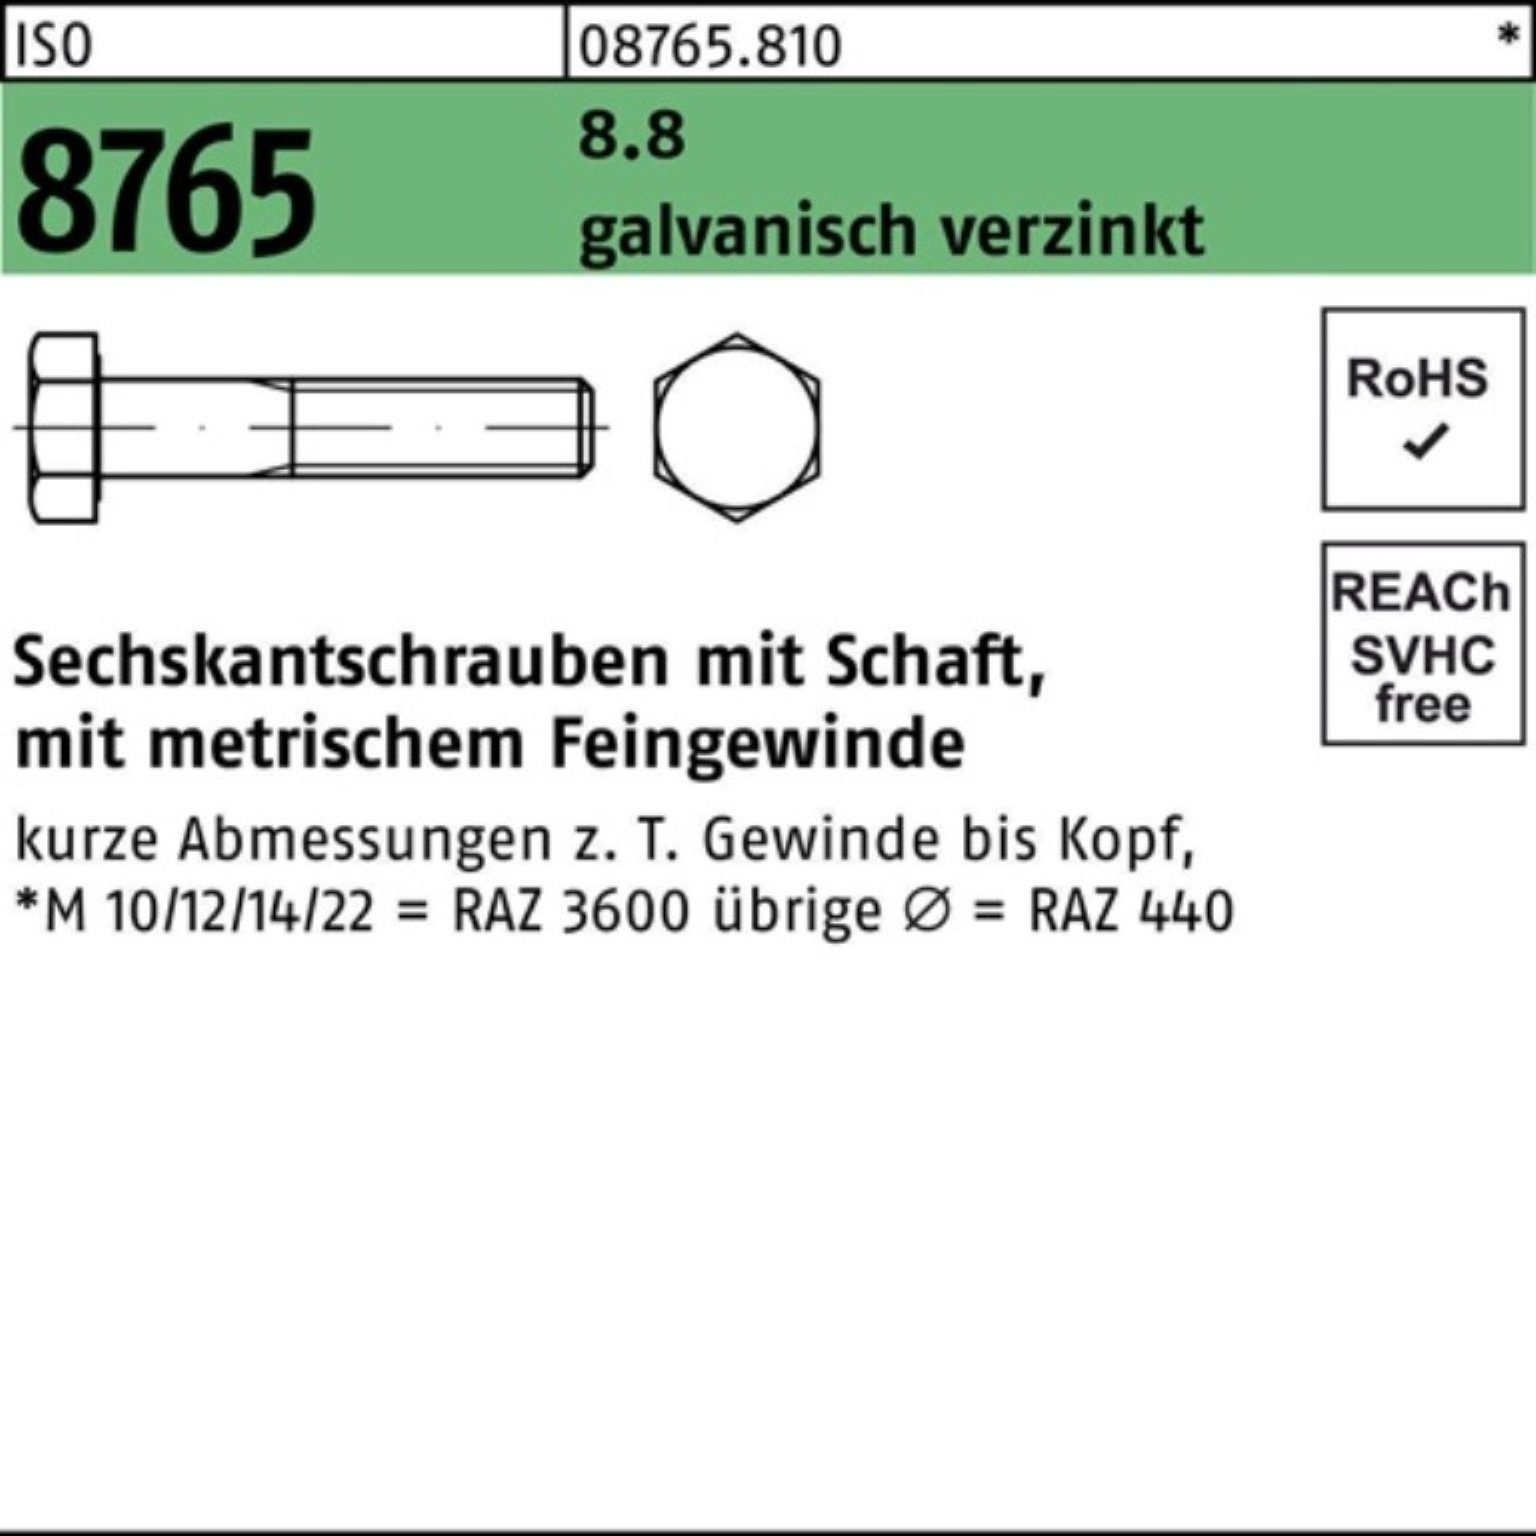 Reyher Sechskantschraube Sechskantschraube 8.8 100er 8765 Pack ISO galv.verz 65 M14x1,5x Schaft